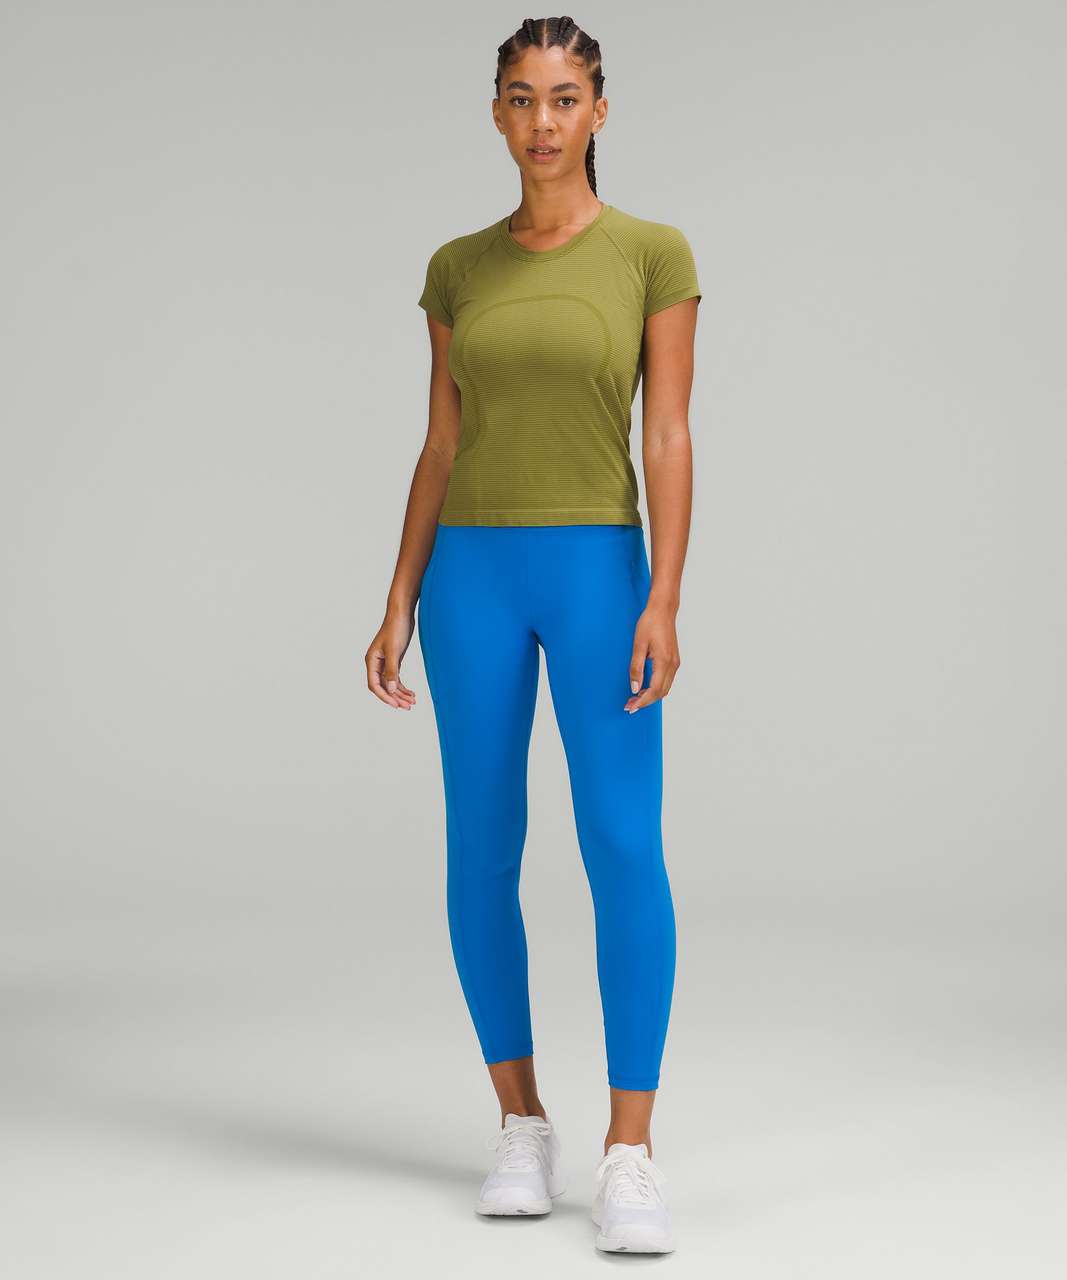 Lululemon Swiftly Tech Short Sleeve Shirt 2.0 *Race Length - Tempo Stripe Bronze Green / Juniper Green